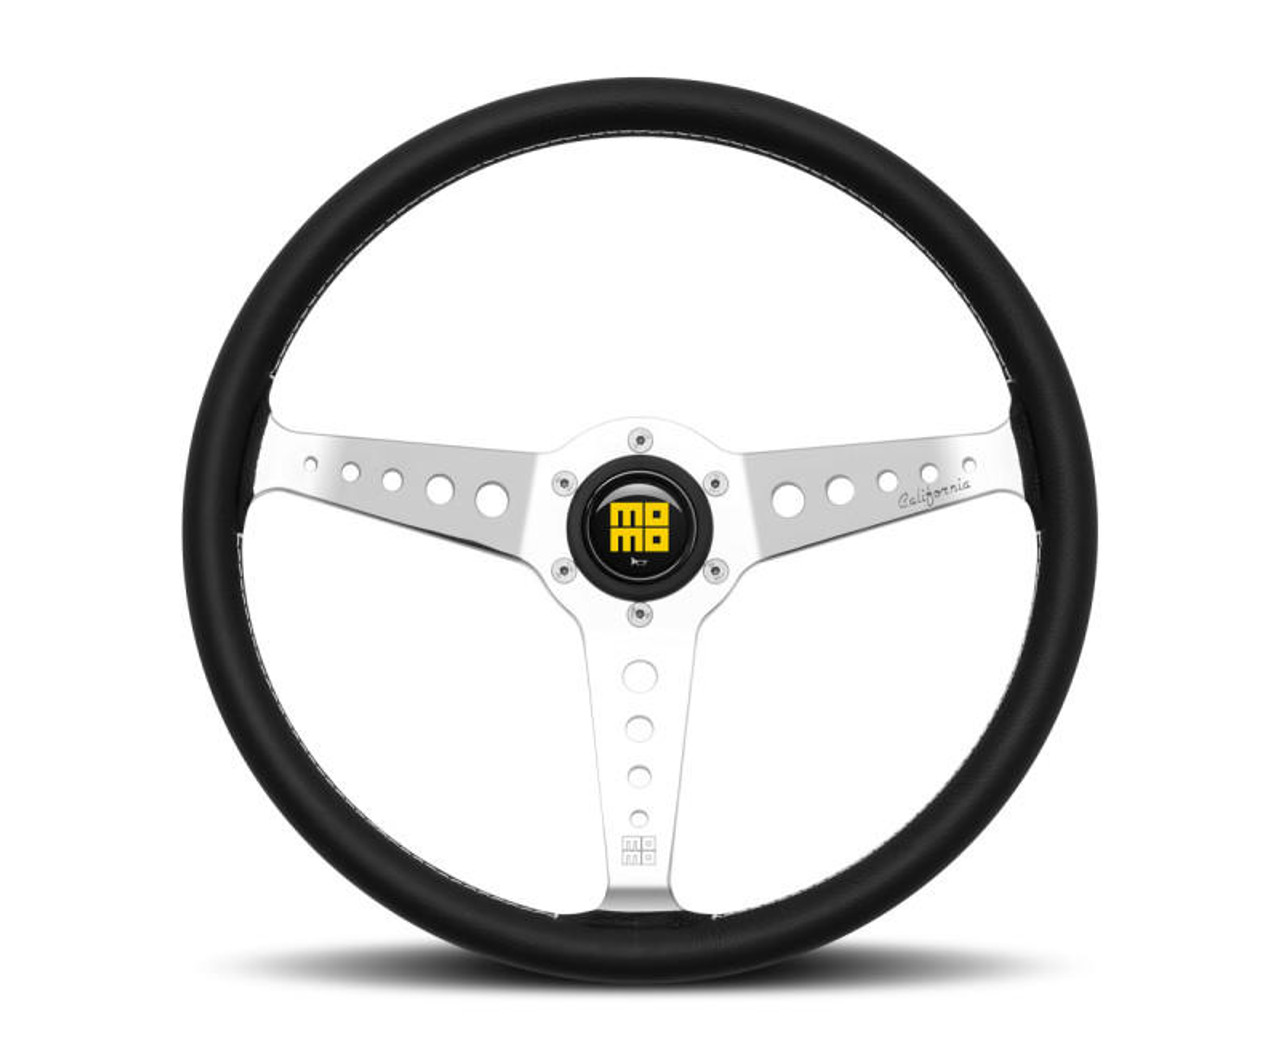 MOMO Momo California Steering Wheel 360 mm - Black Leather/White Stitch/Pol Spokes - CAL36BK2S 